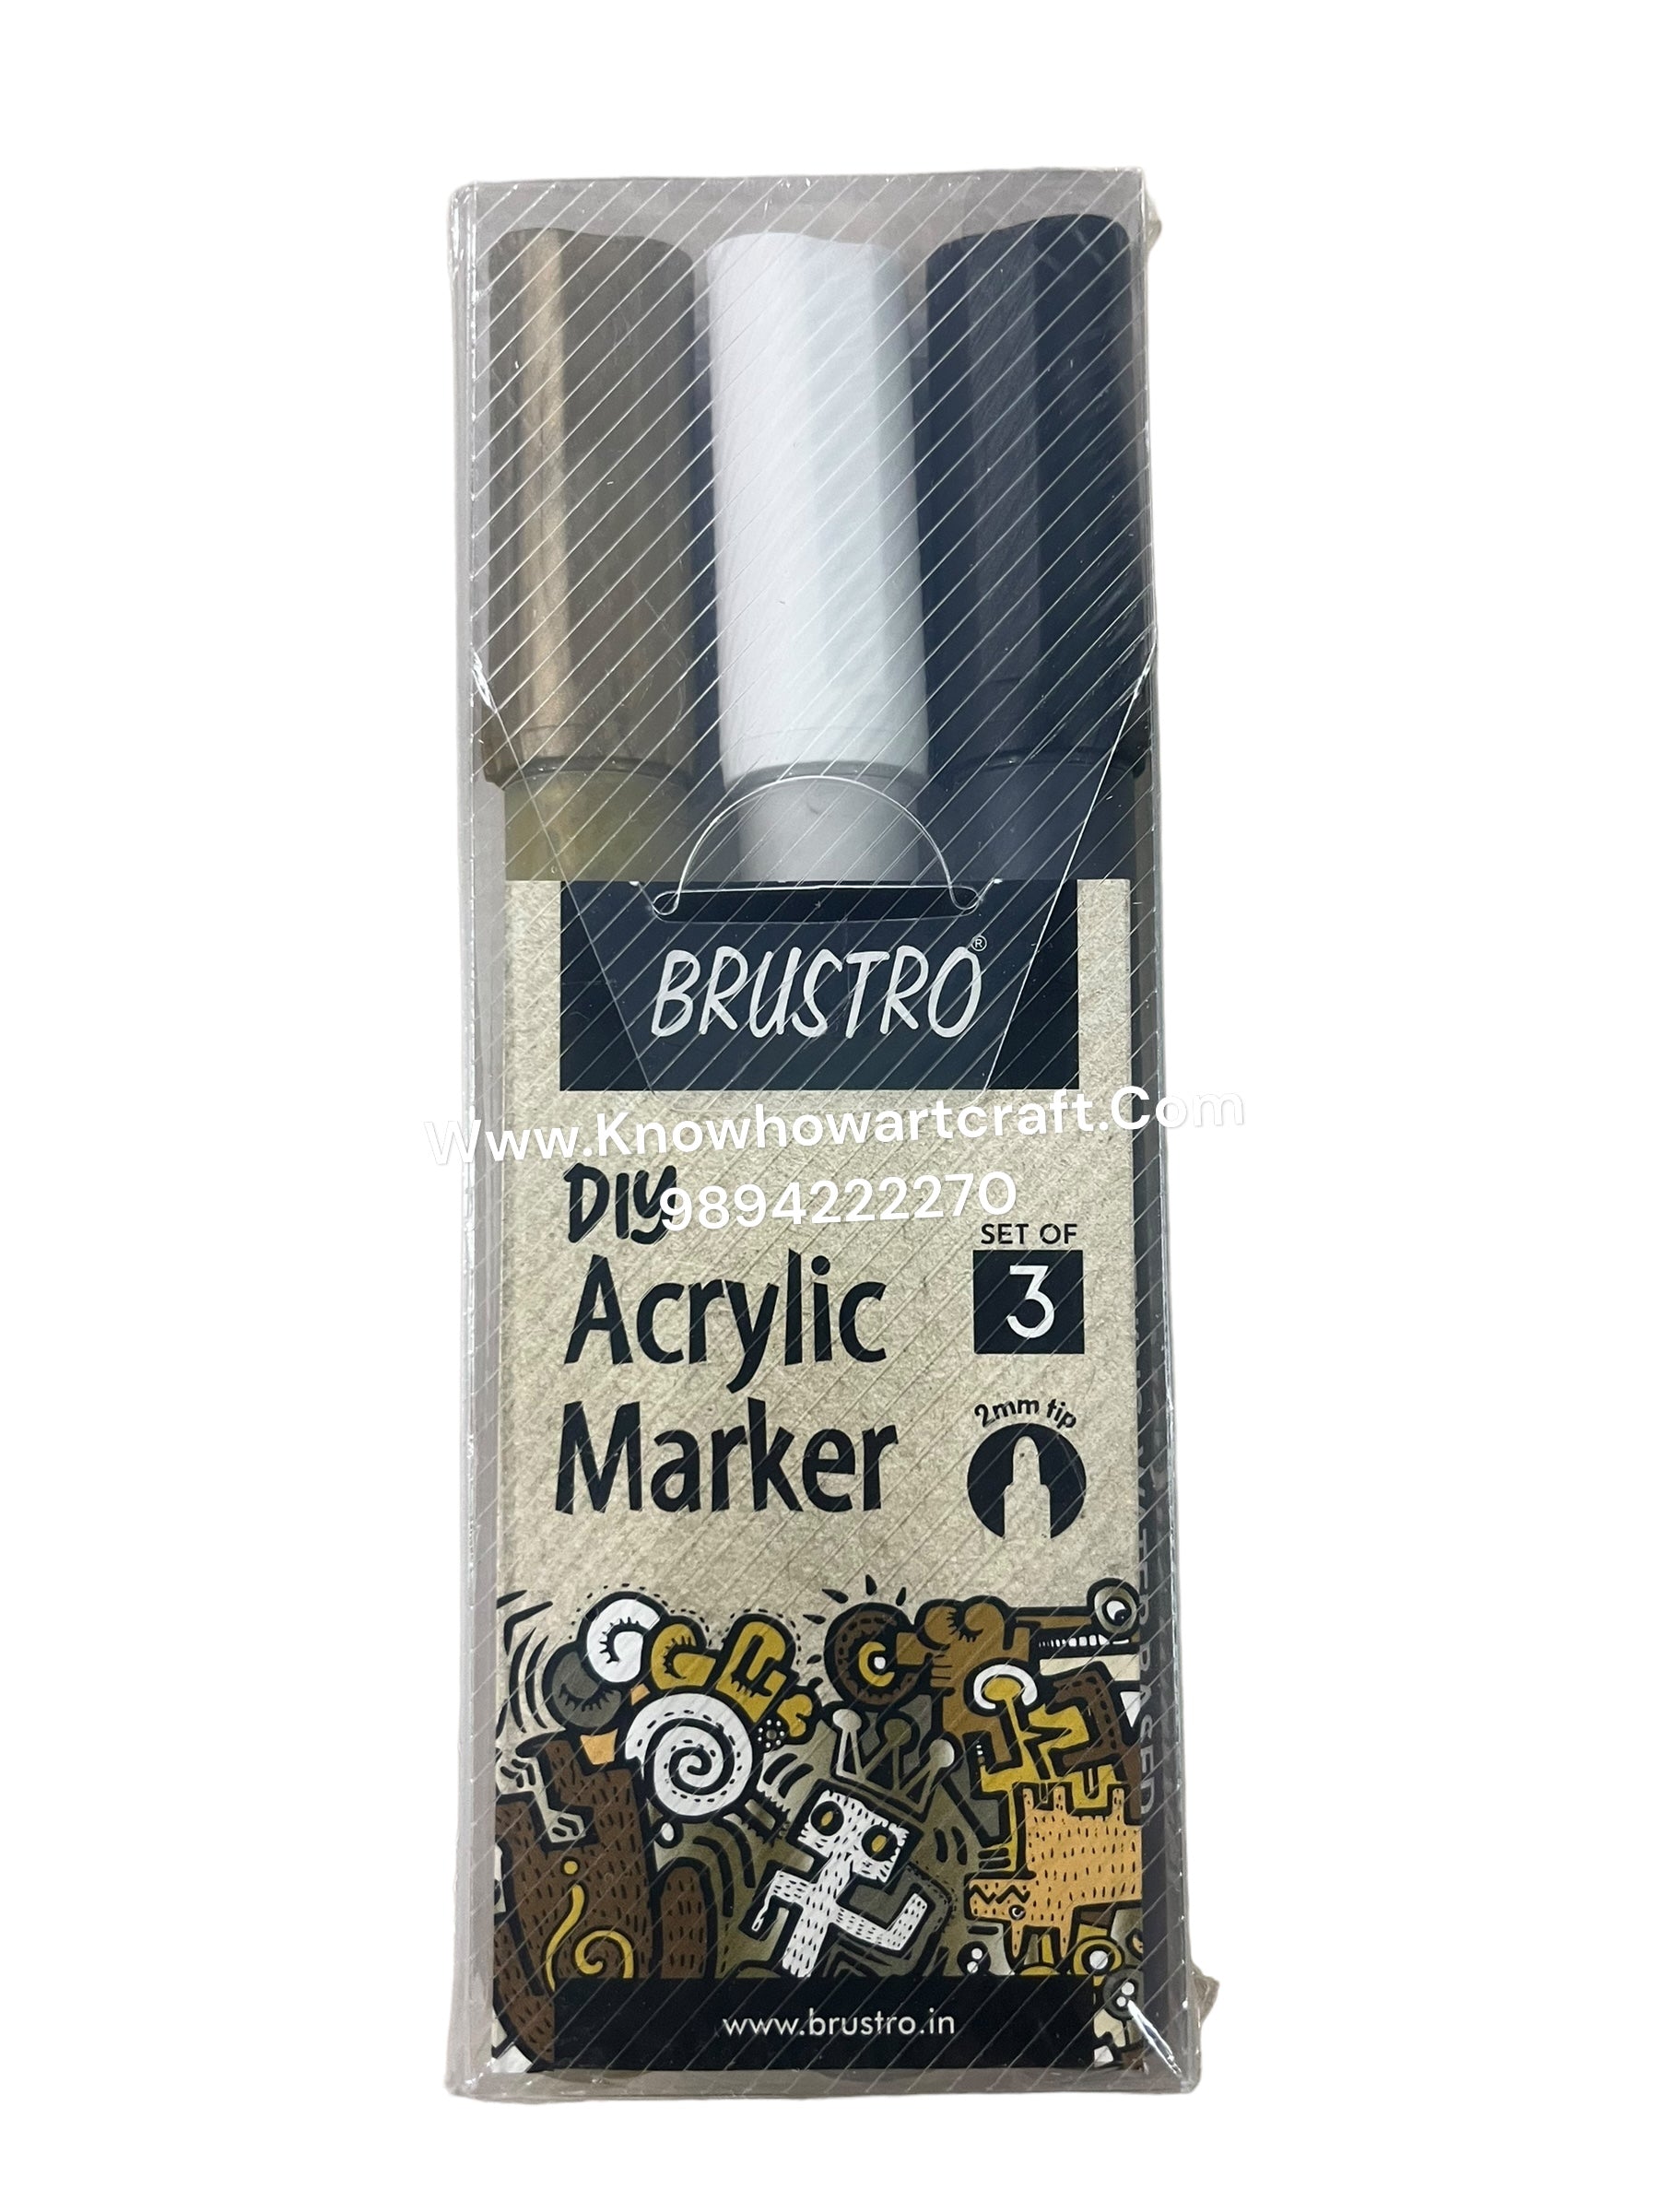 Brustro Diy Acrylic Marker set of 3